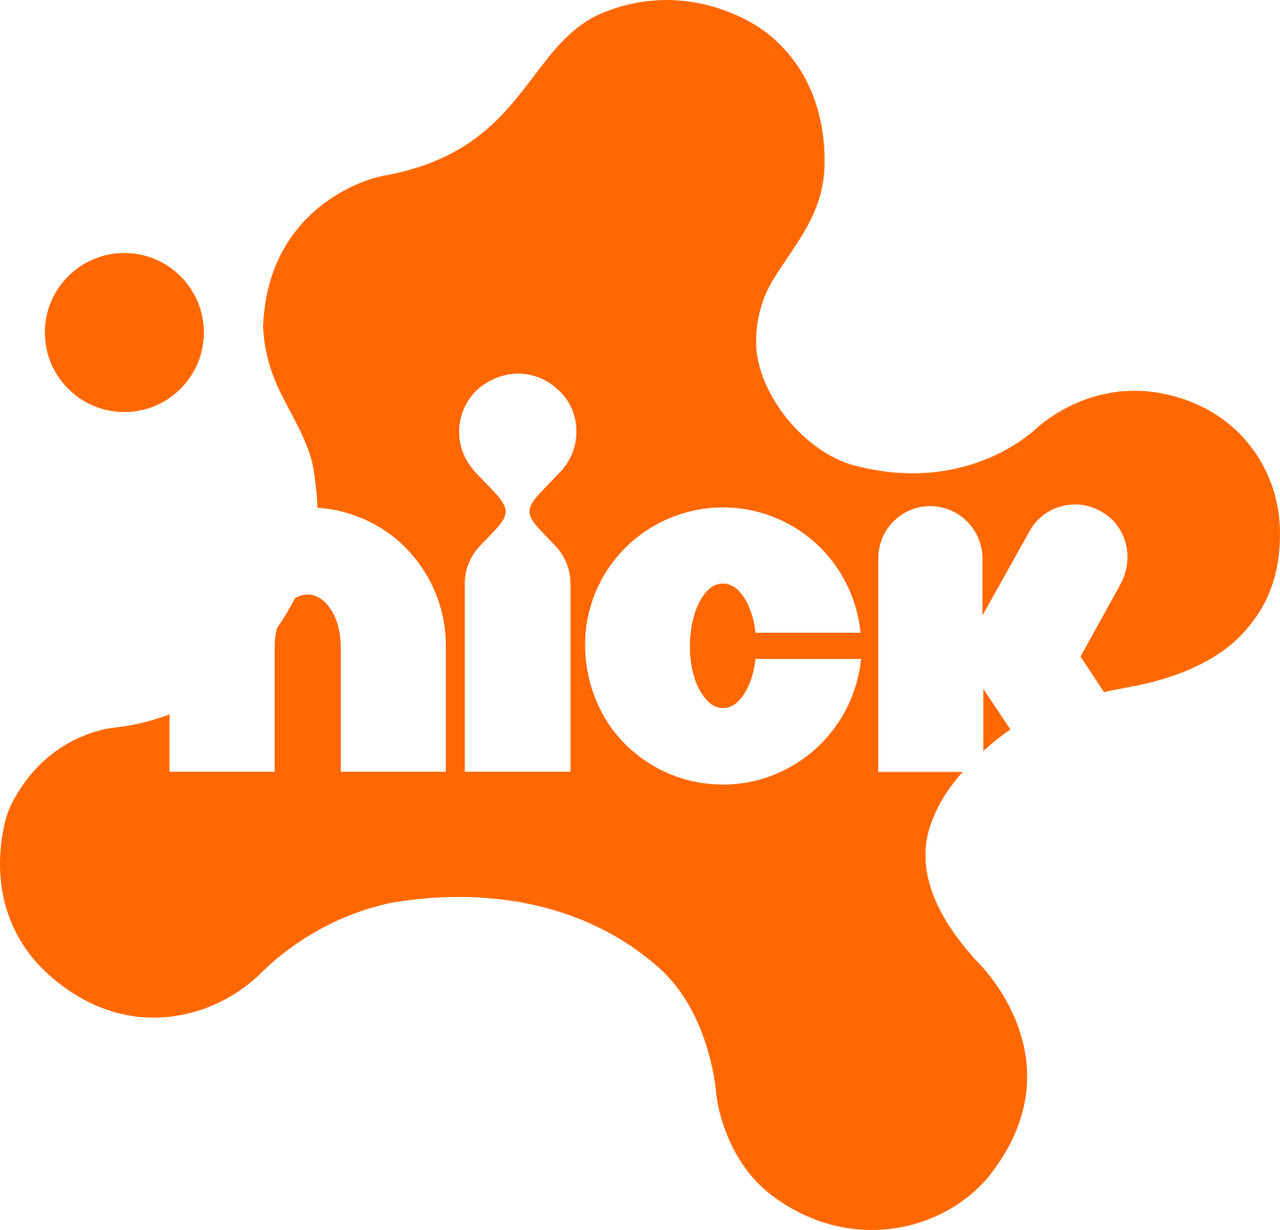 Nick (Nickelodeon) Splat 2023 Logo by TamaraMichael on DeviantArt